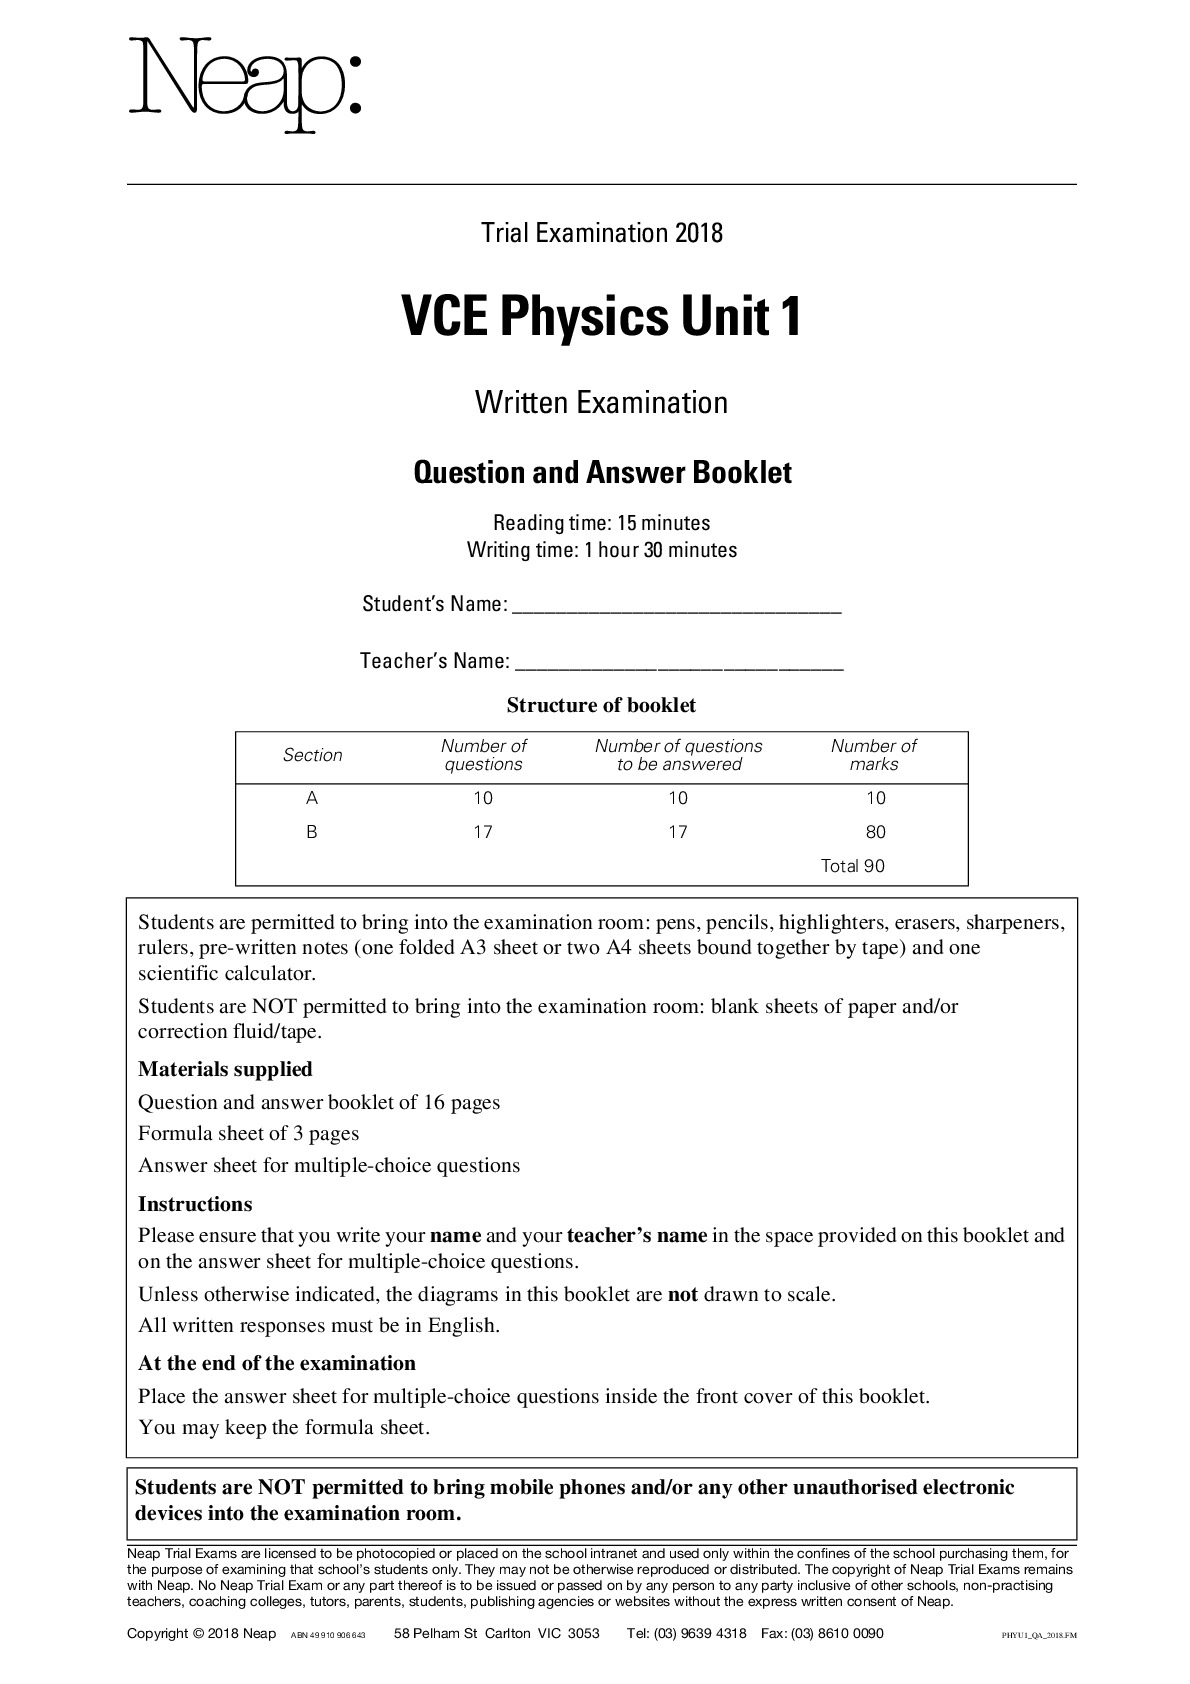 Physics___Prac_Exam.pdf